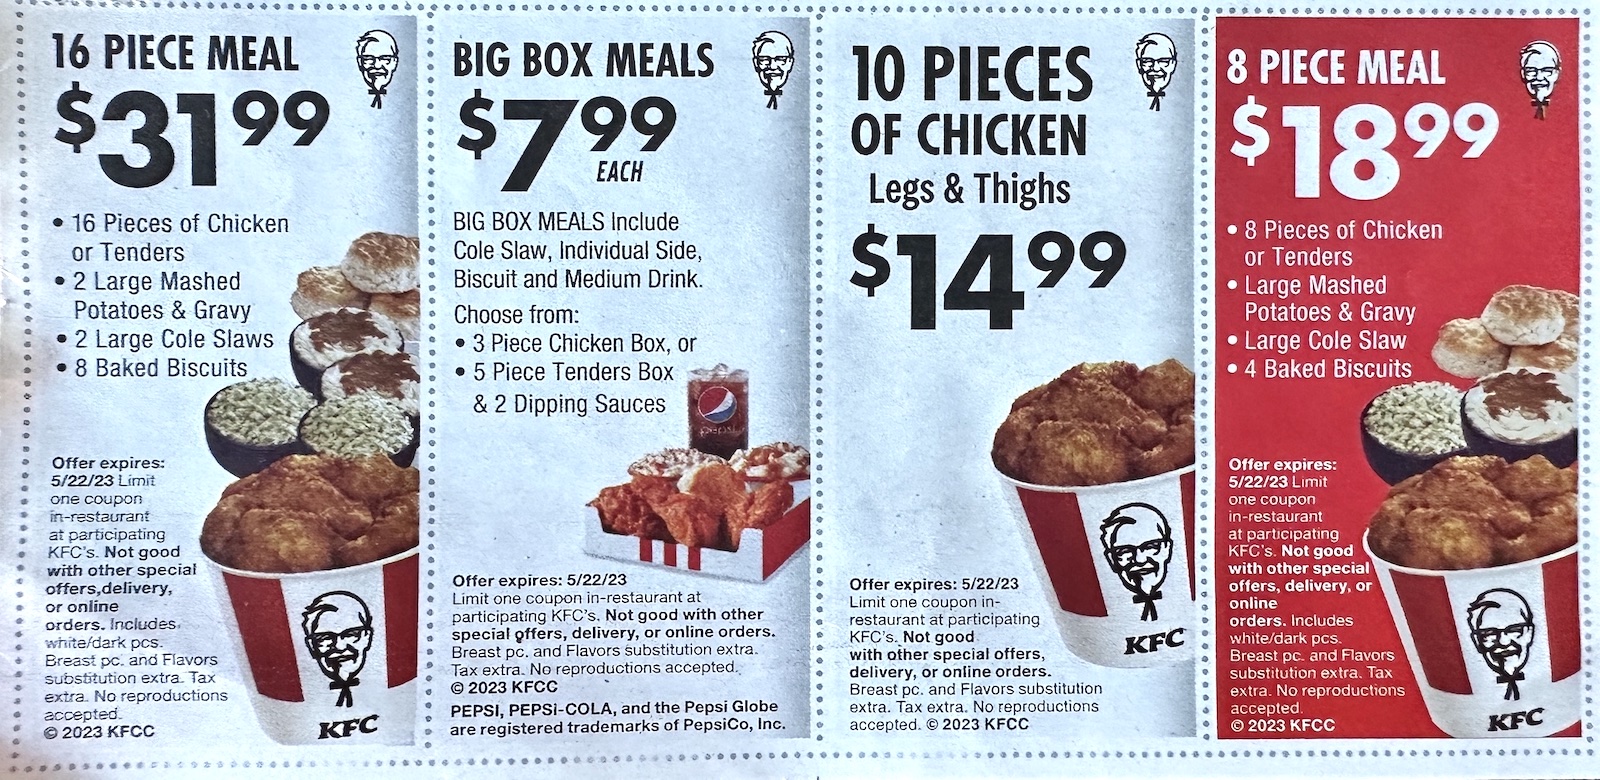 Kentucky Fried Chicken Kfc Coupons Deals Expires 5 22 2023 2 